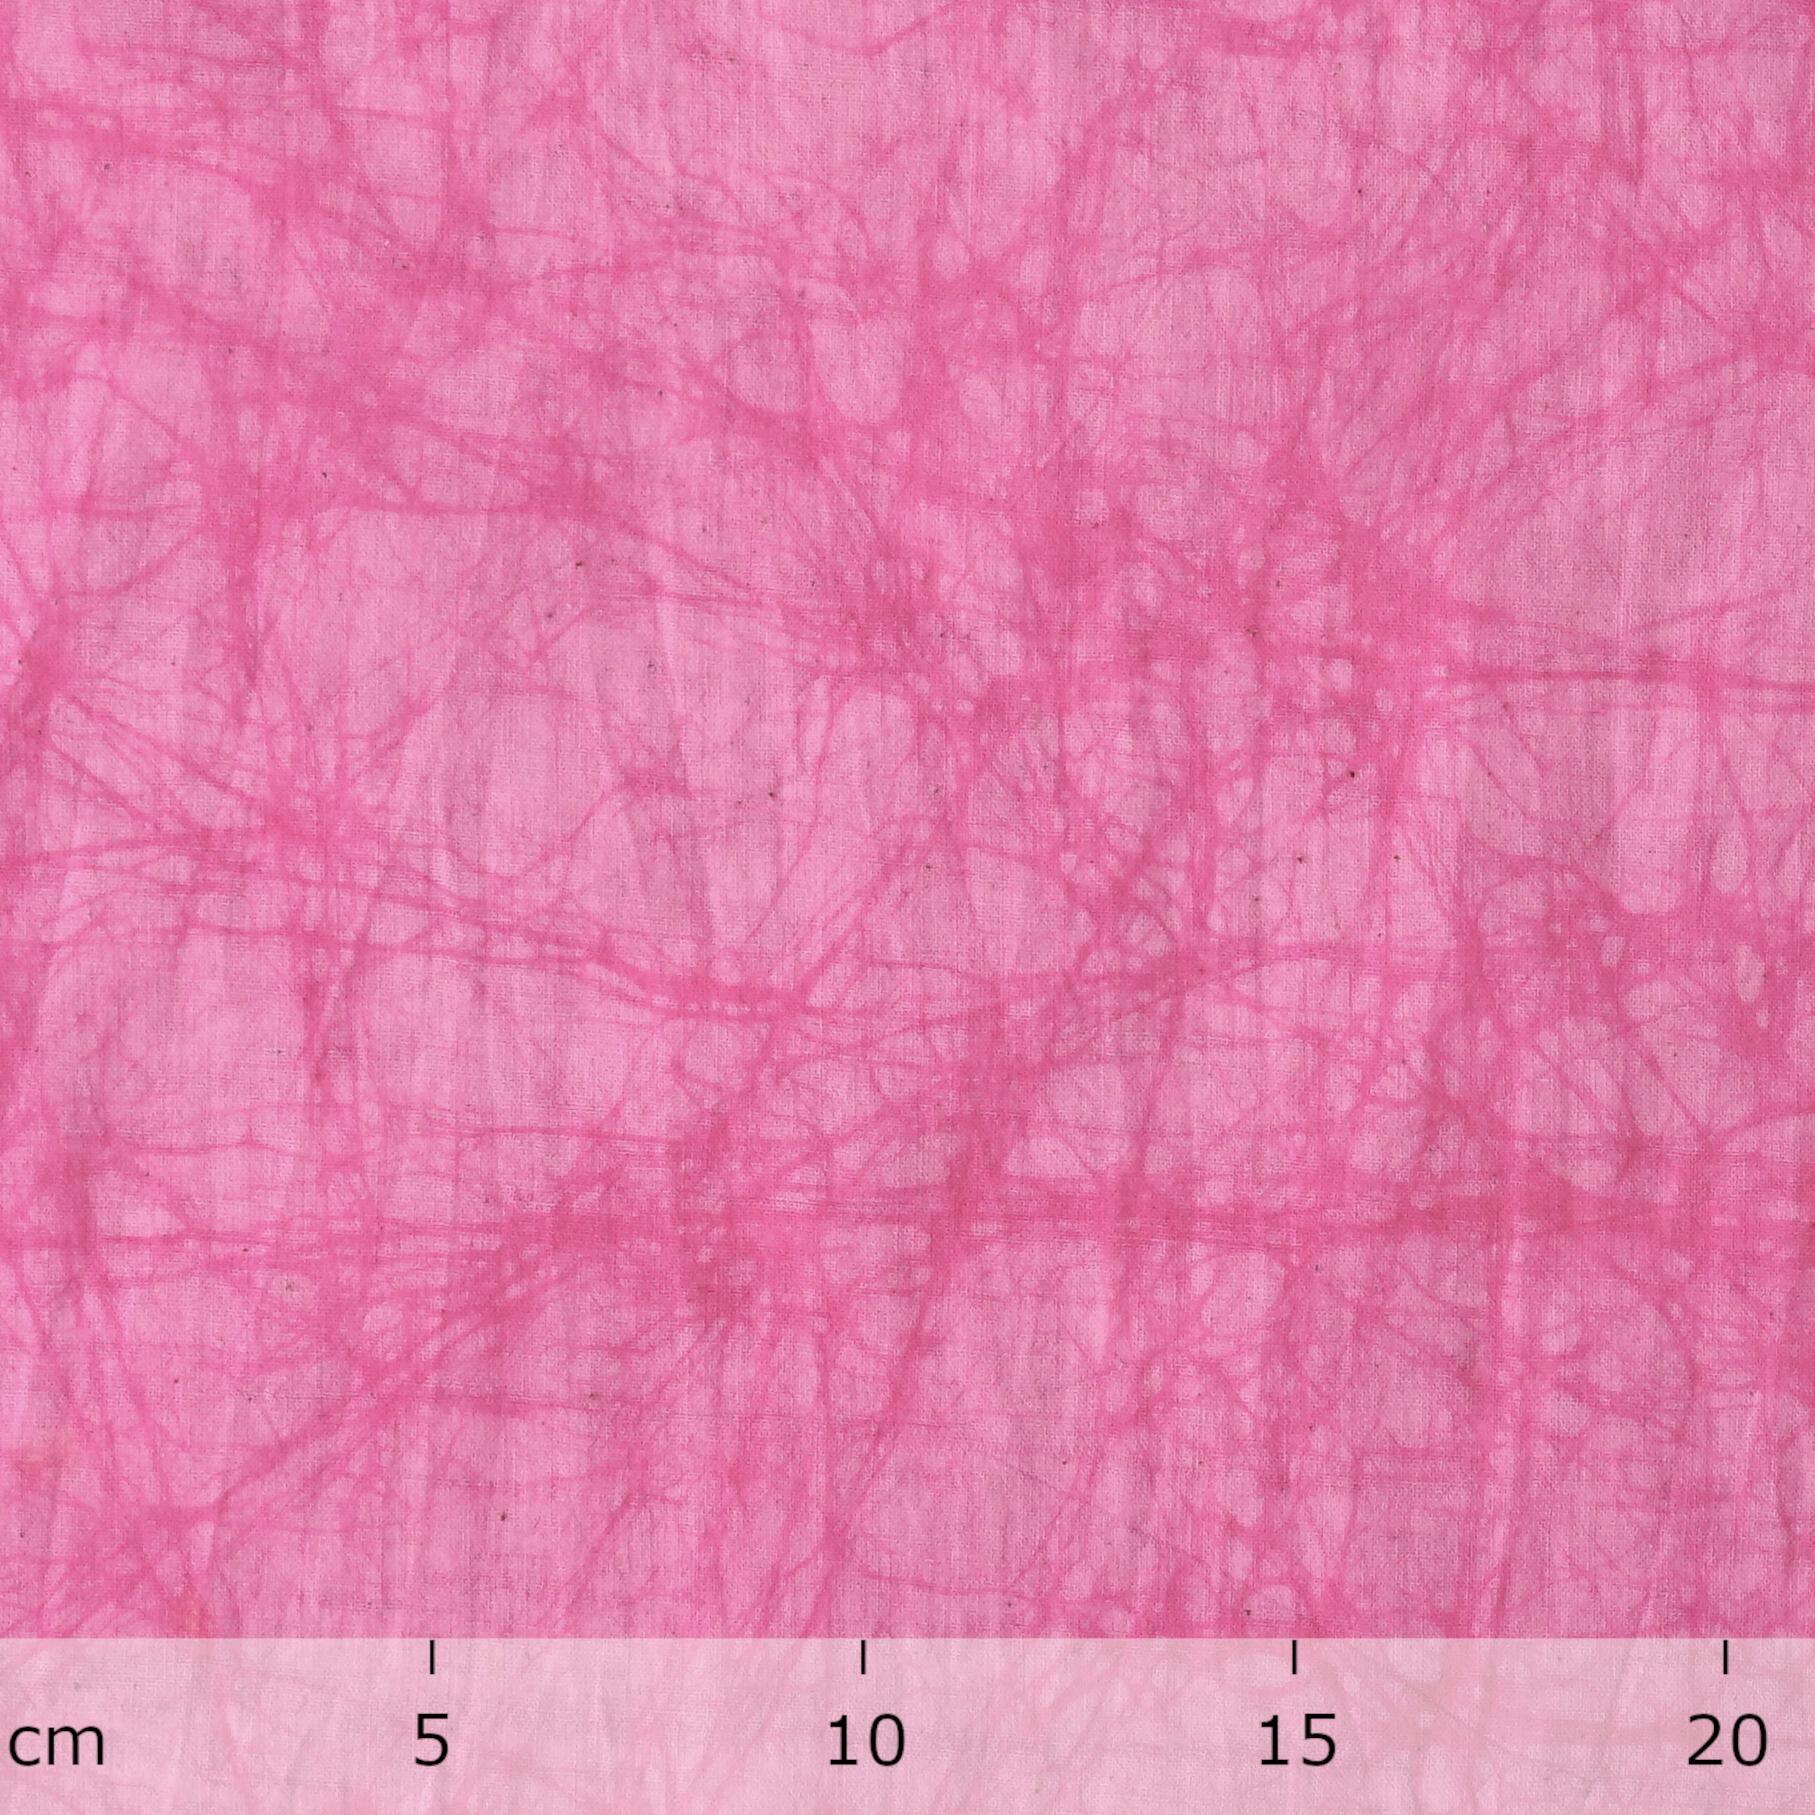 100% Block-Printed Batik Cotton Fabric From India - Batik - Pink Red Litho - Ruler